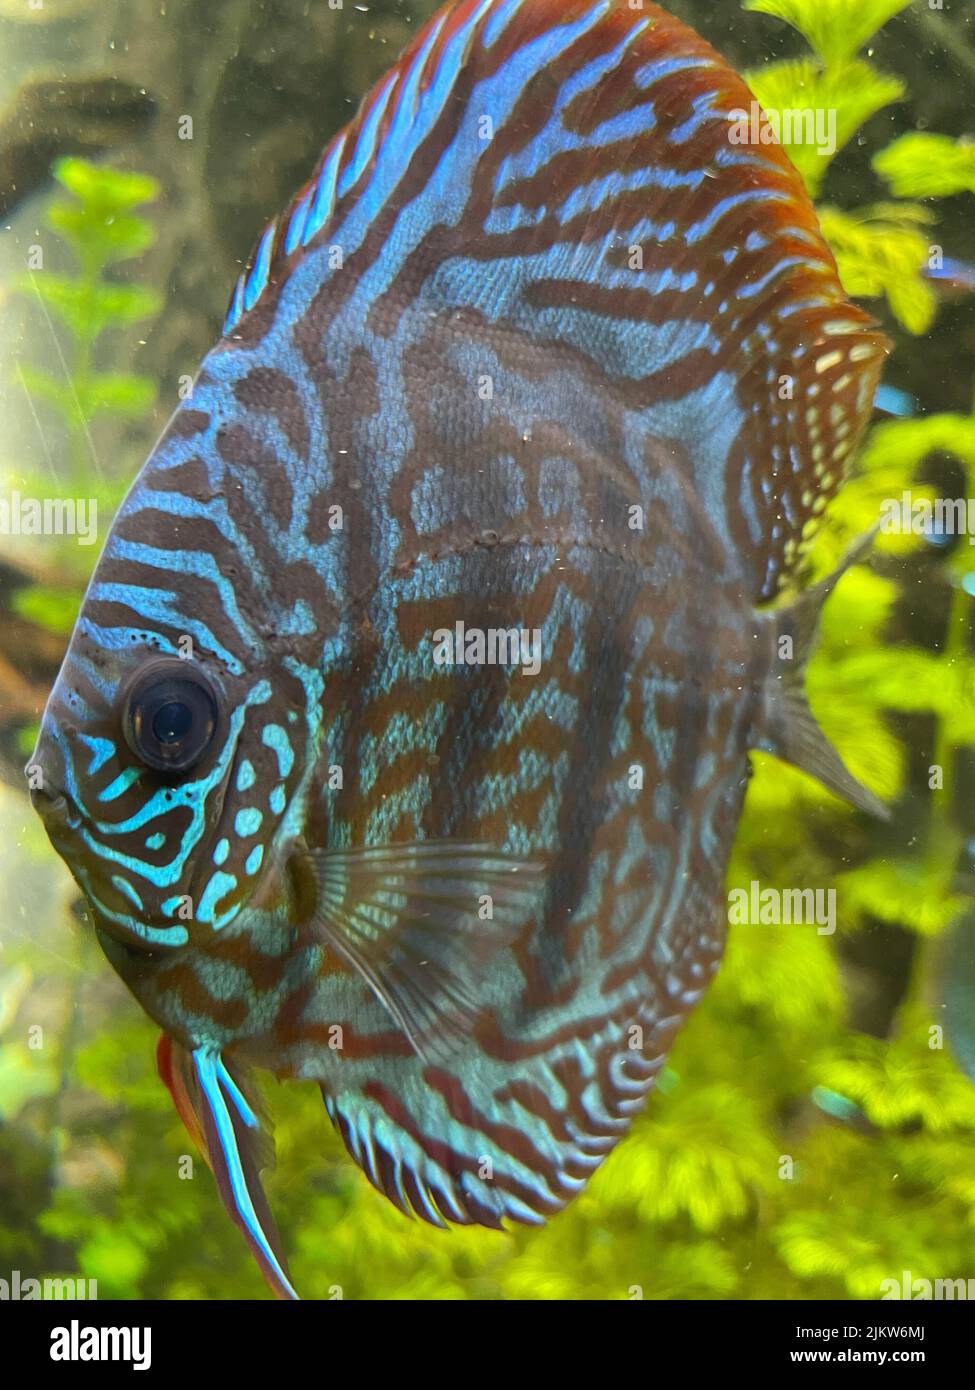 A vertical shot of Discus fish swimming in an aquarium Stock Photo